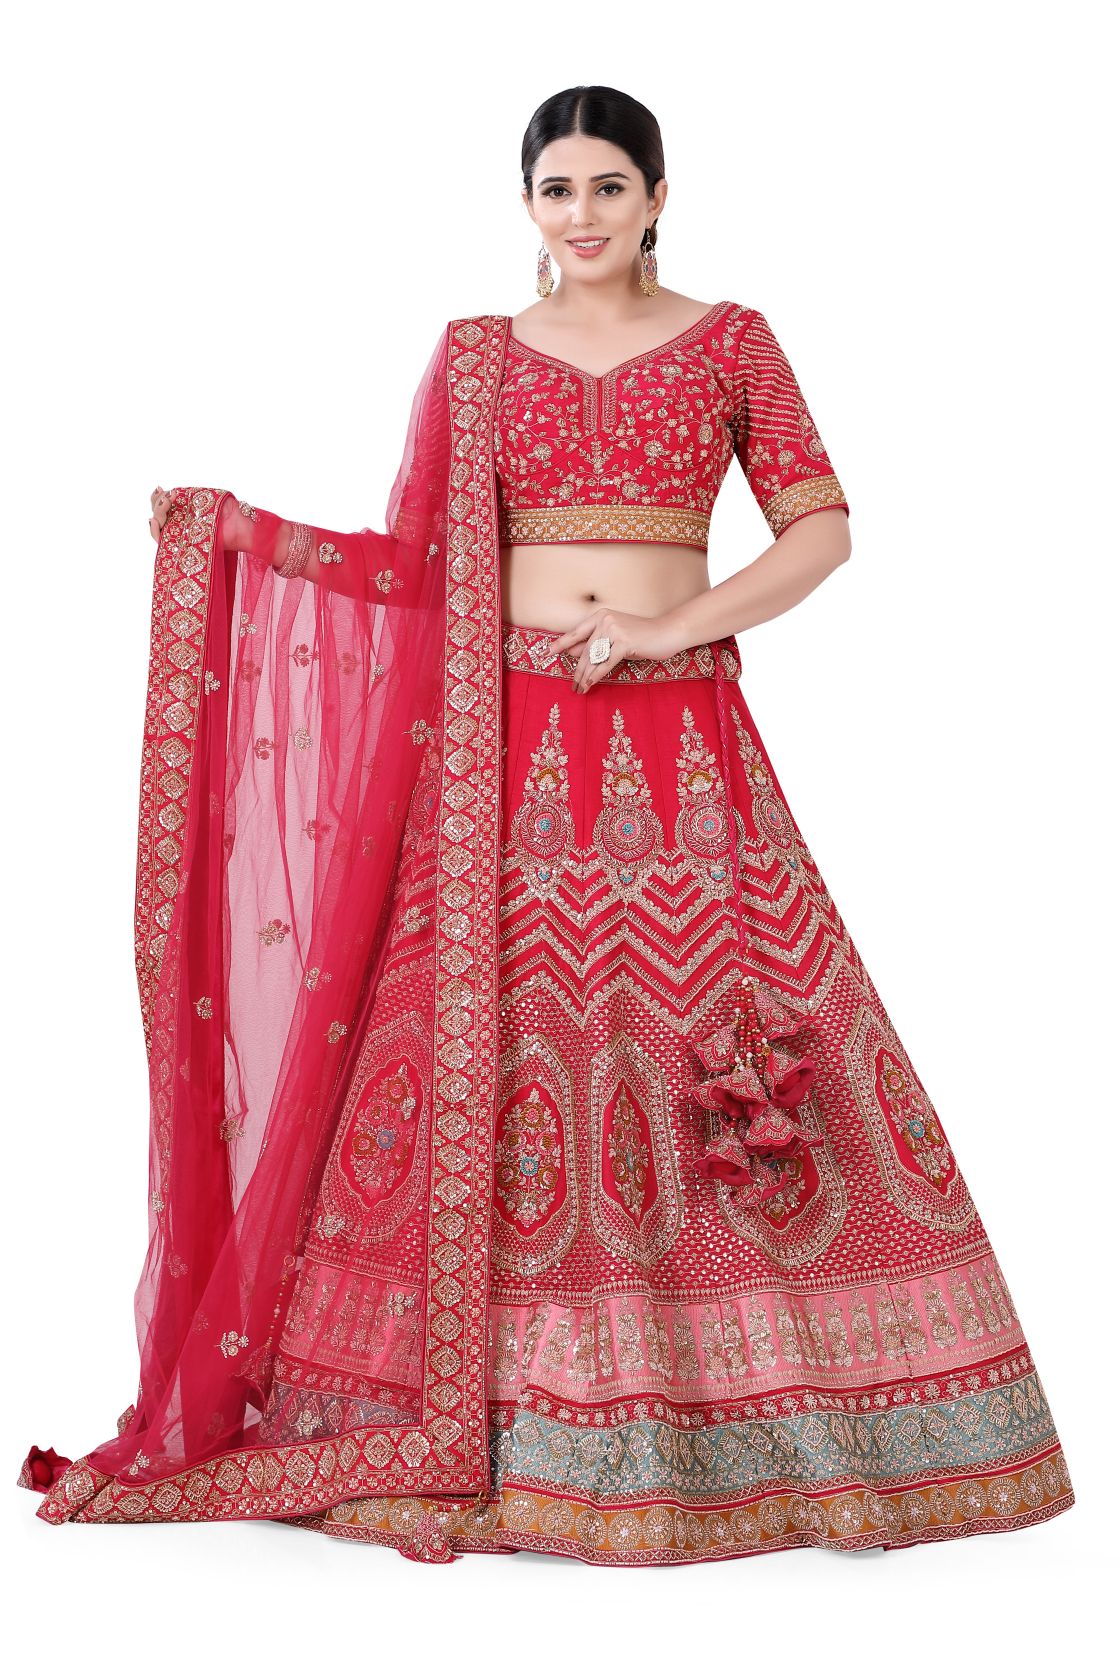 Red Silk Bridal Lehenga Choli - Premium Bridal lehenga from Dulhan Exclusives - Just $3685! Shop now at Dulhan Exclusives